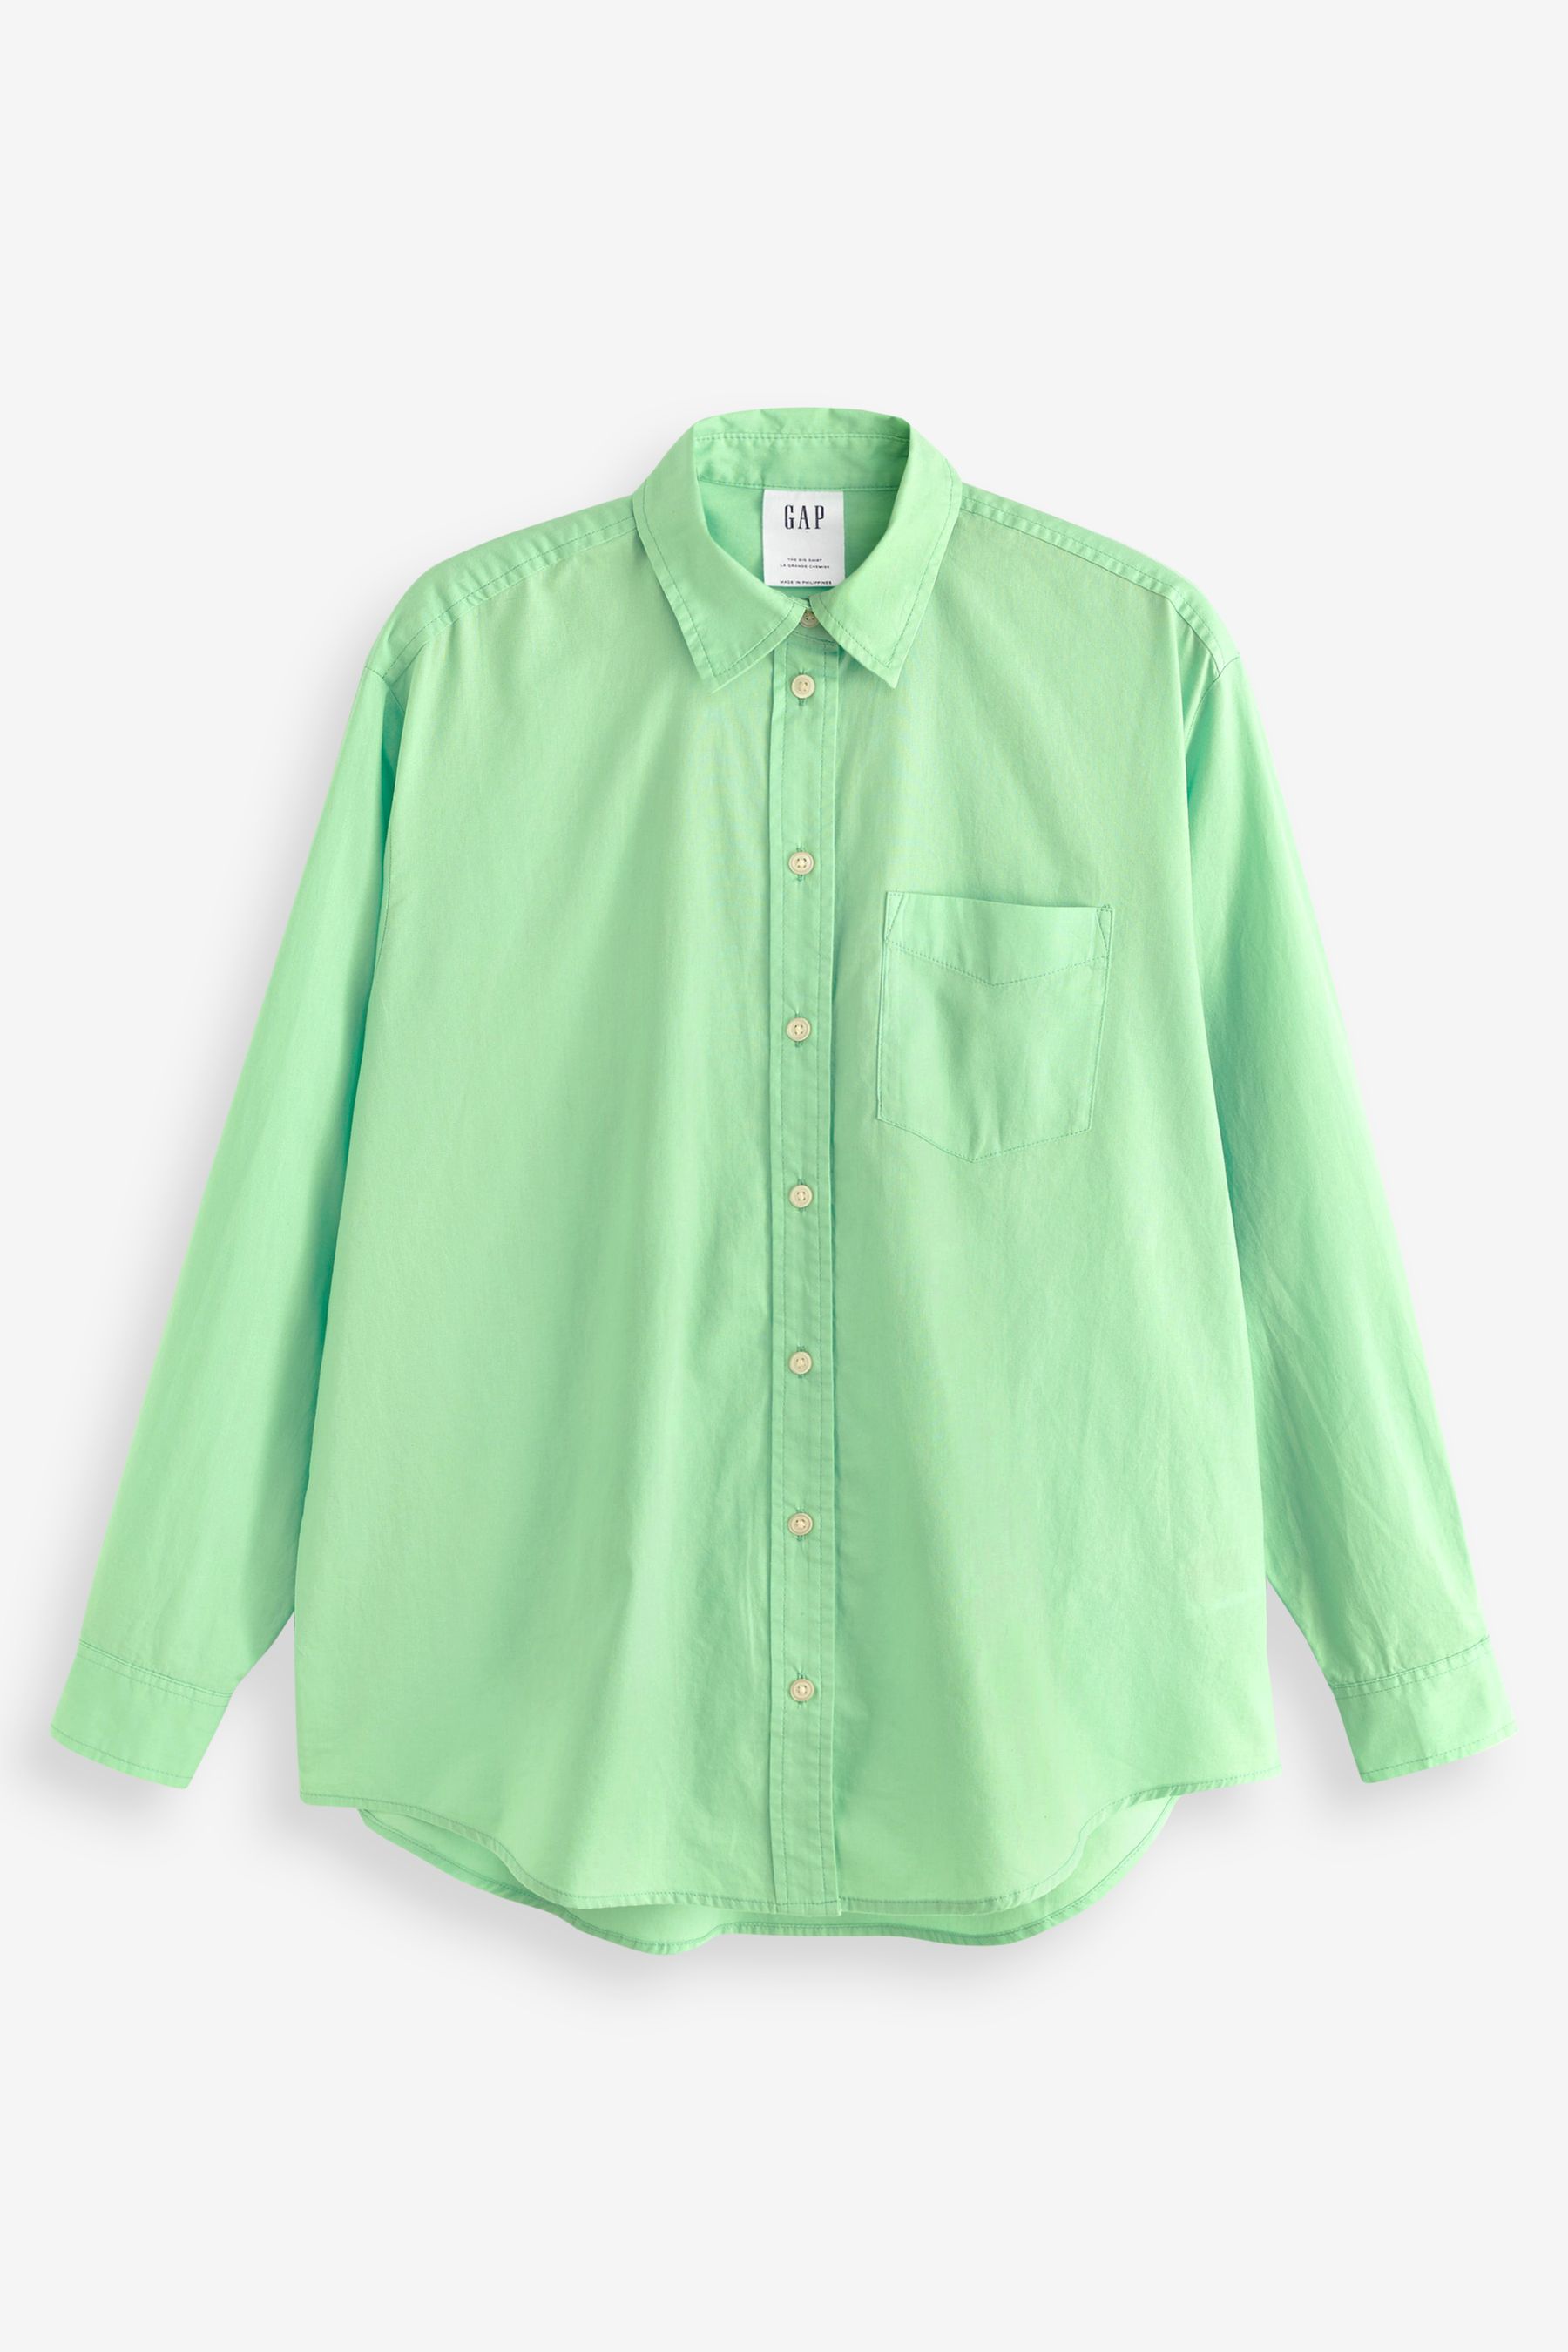 Buy Gap Poplin Big Shirt from the Gap online shop